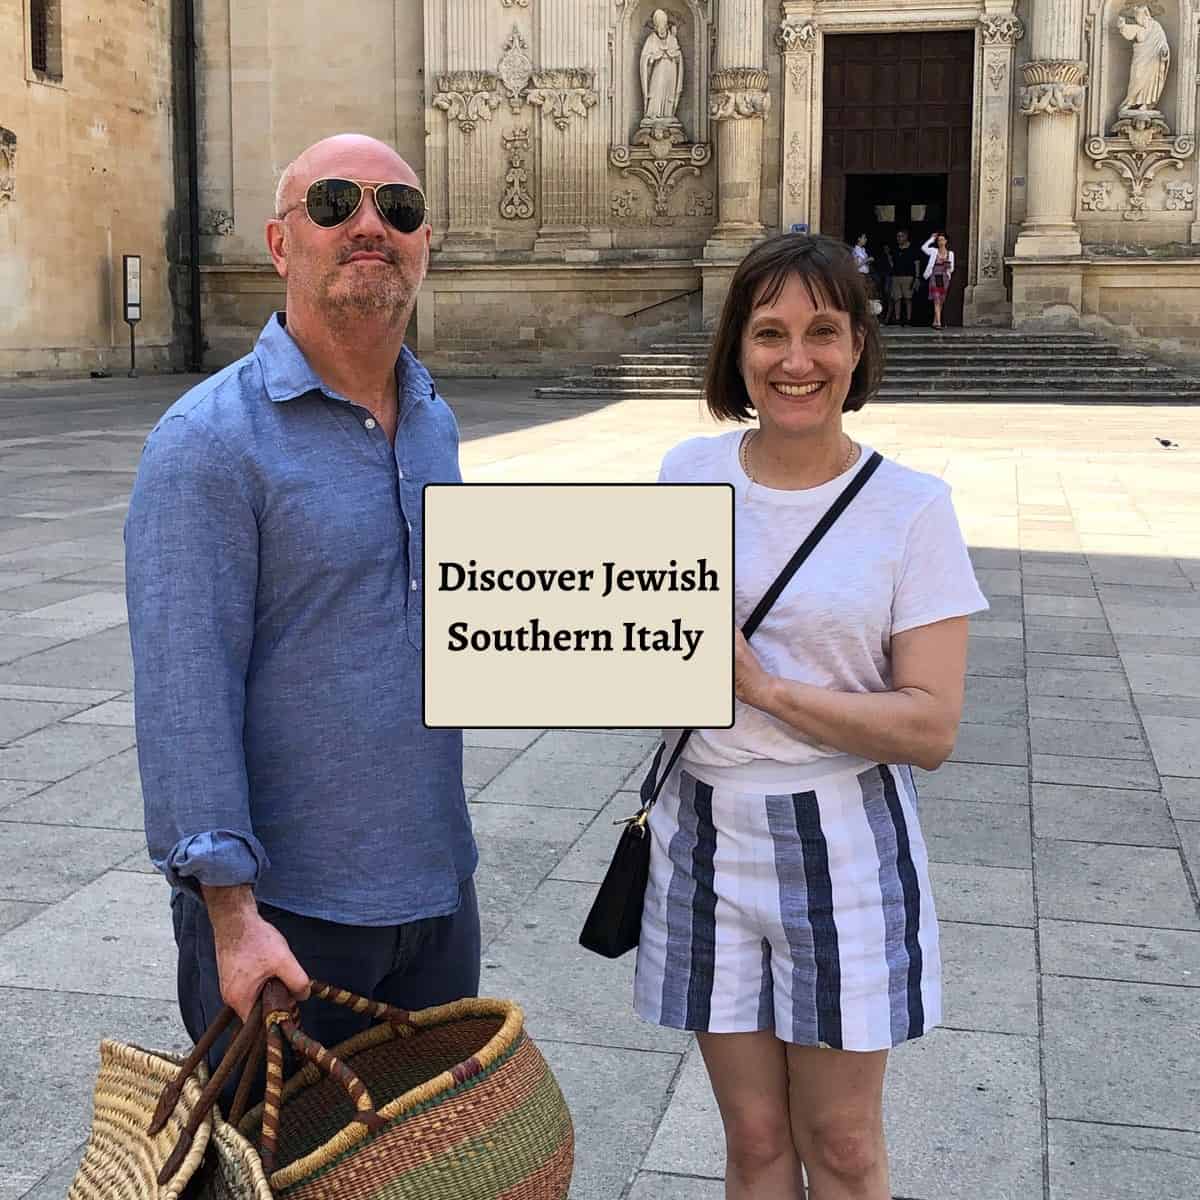 Dana and Silvestro in the piazza in Lecce, Italy.